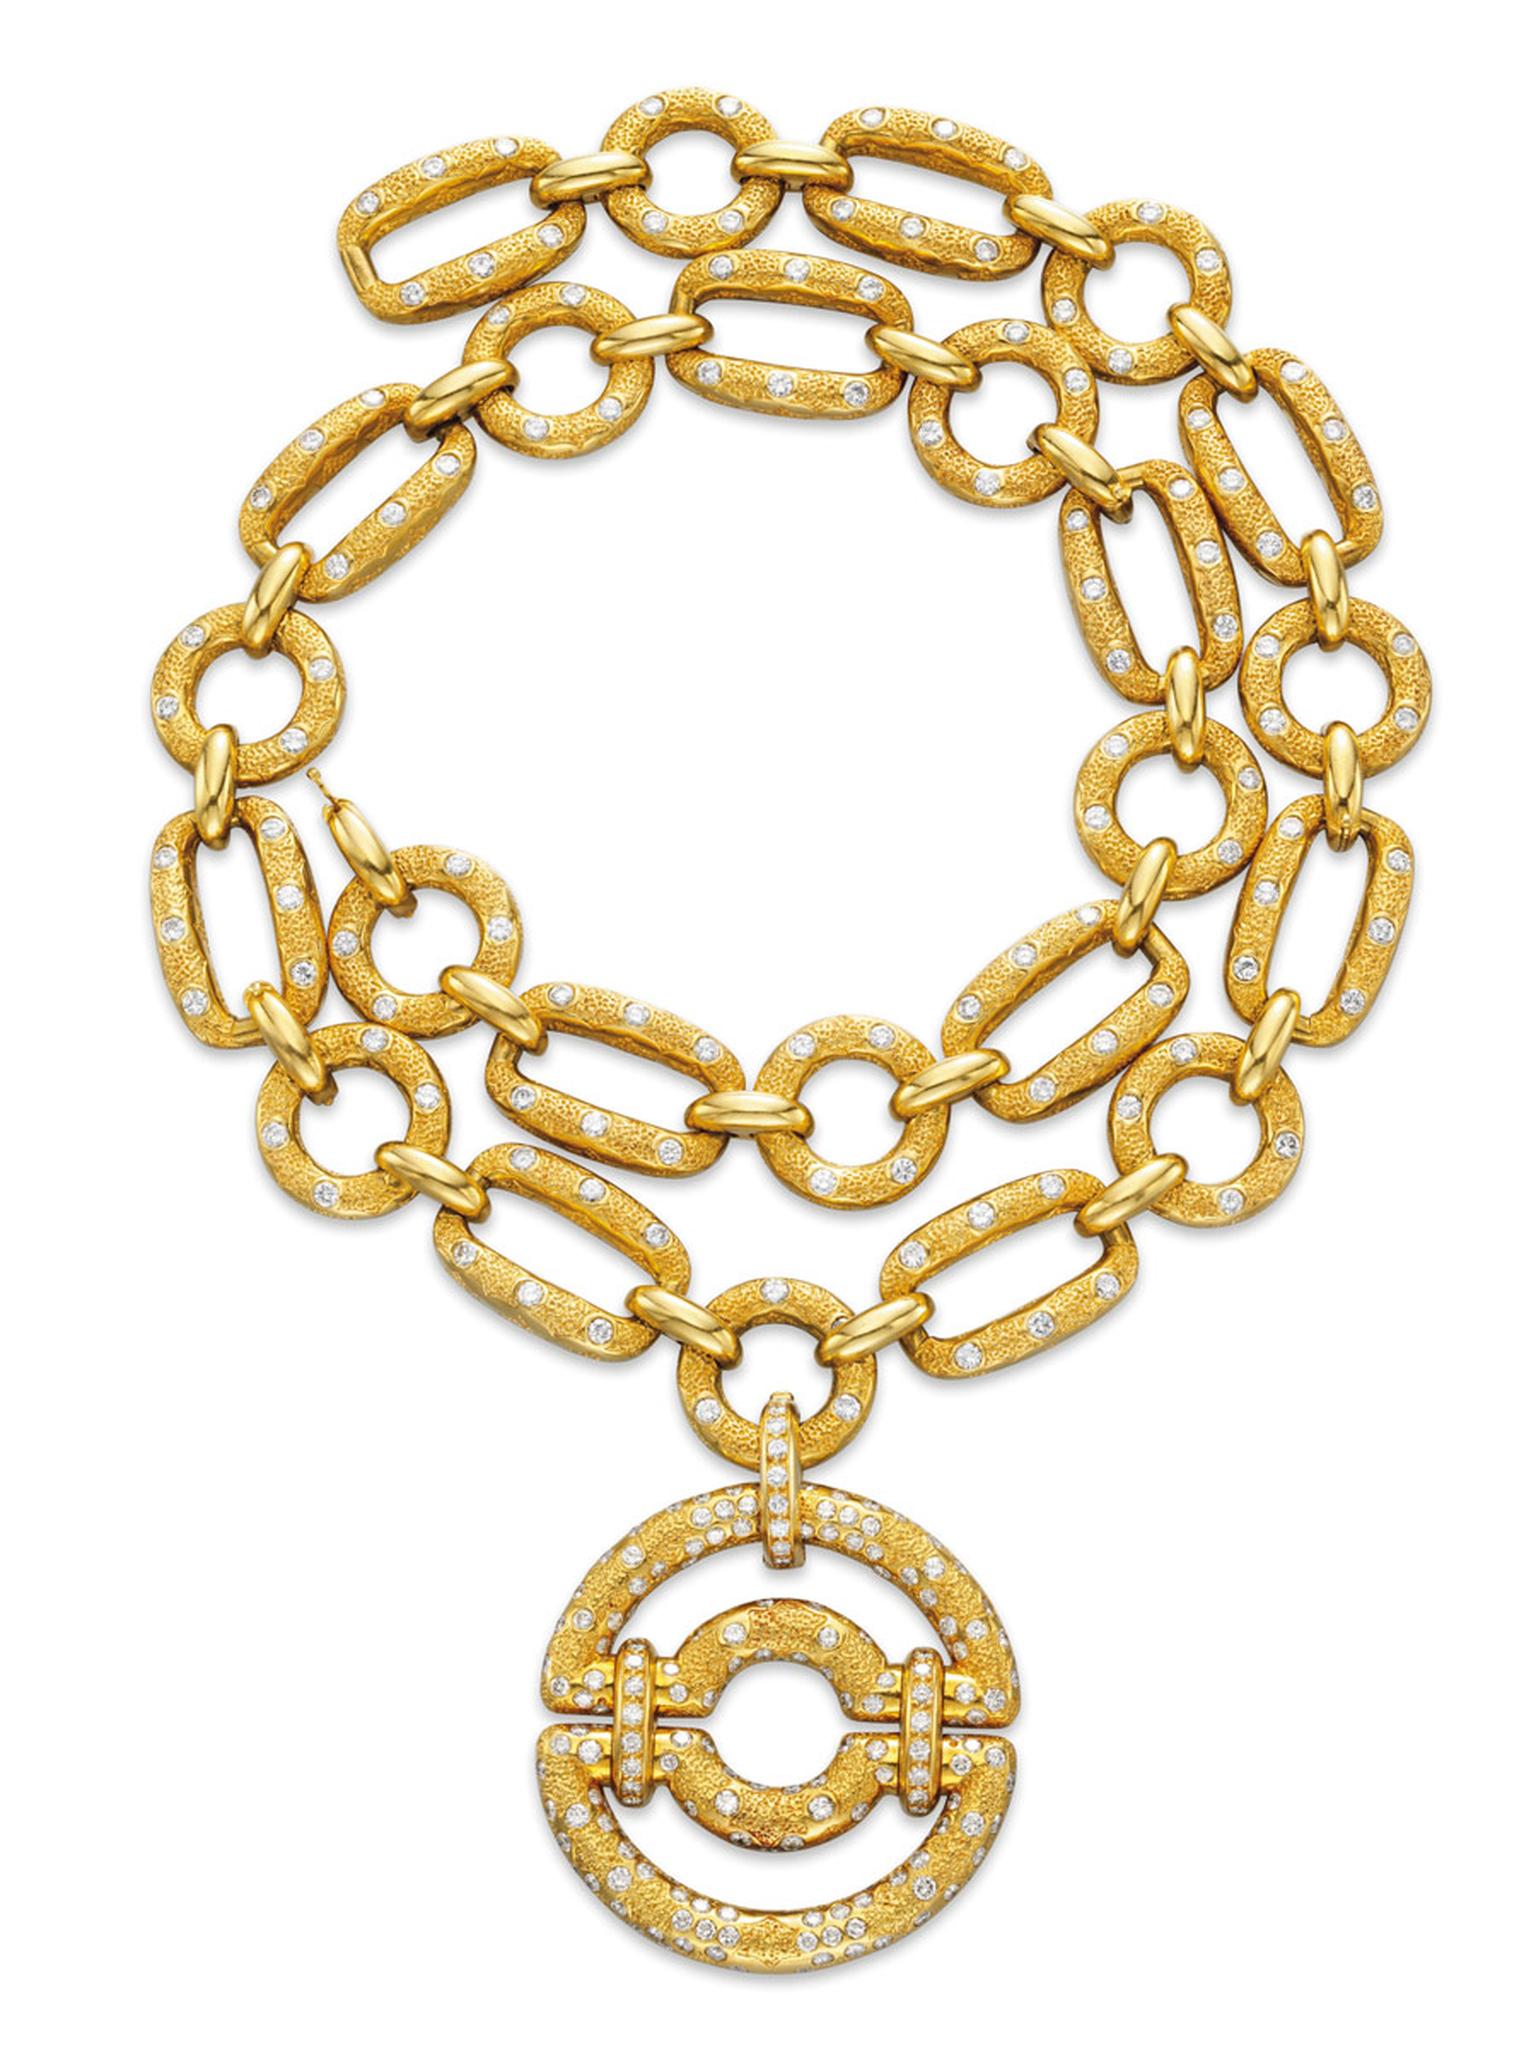 Van-Cleef-Arpels-Sevres-necklace.jpg